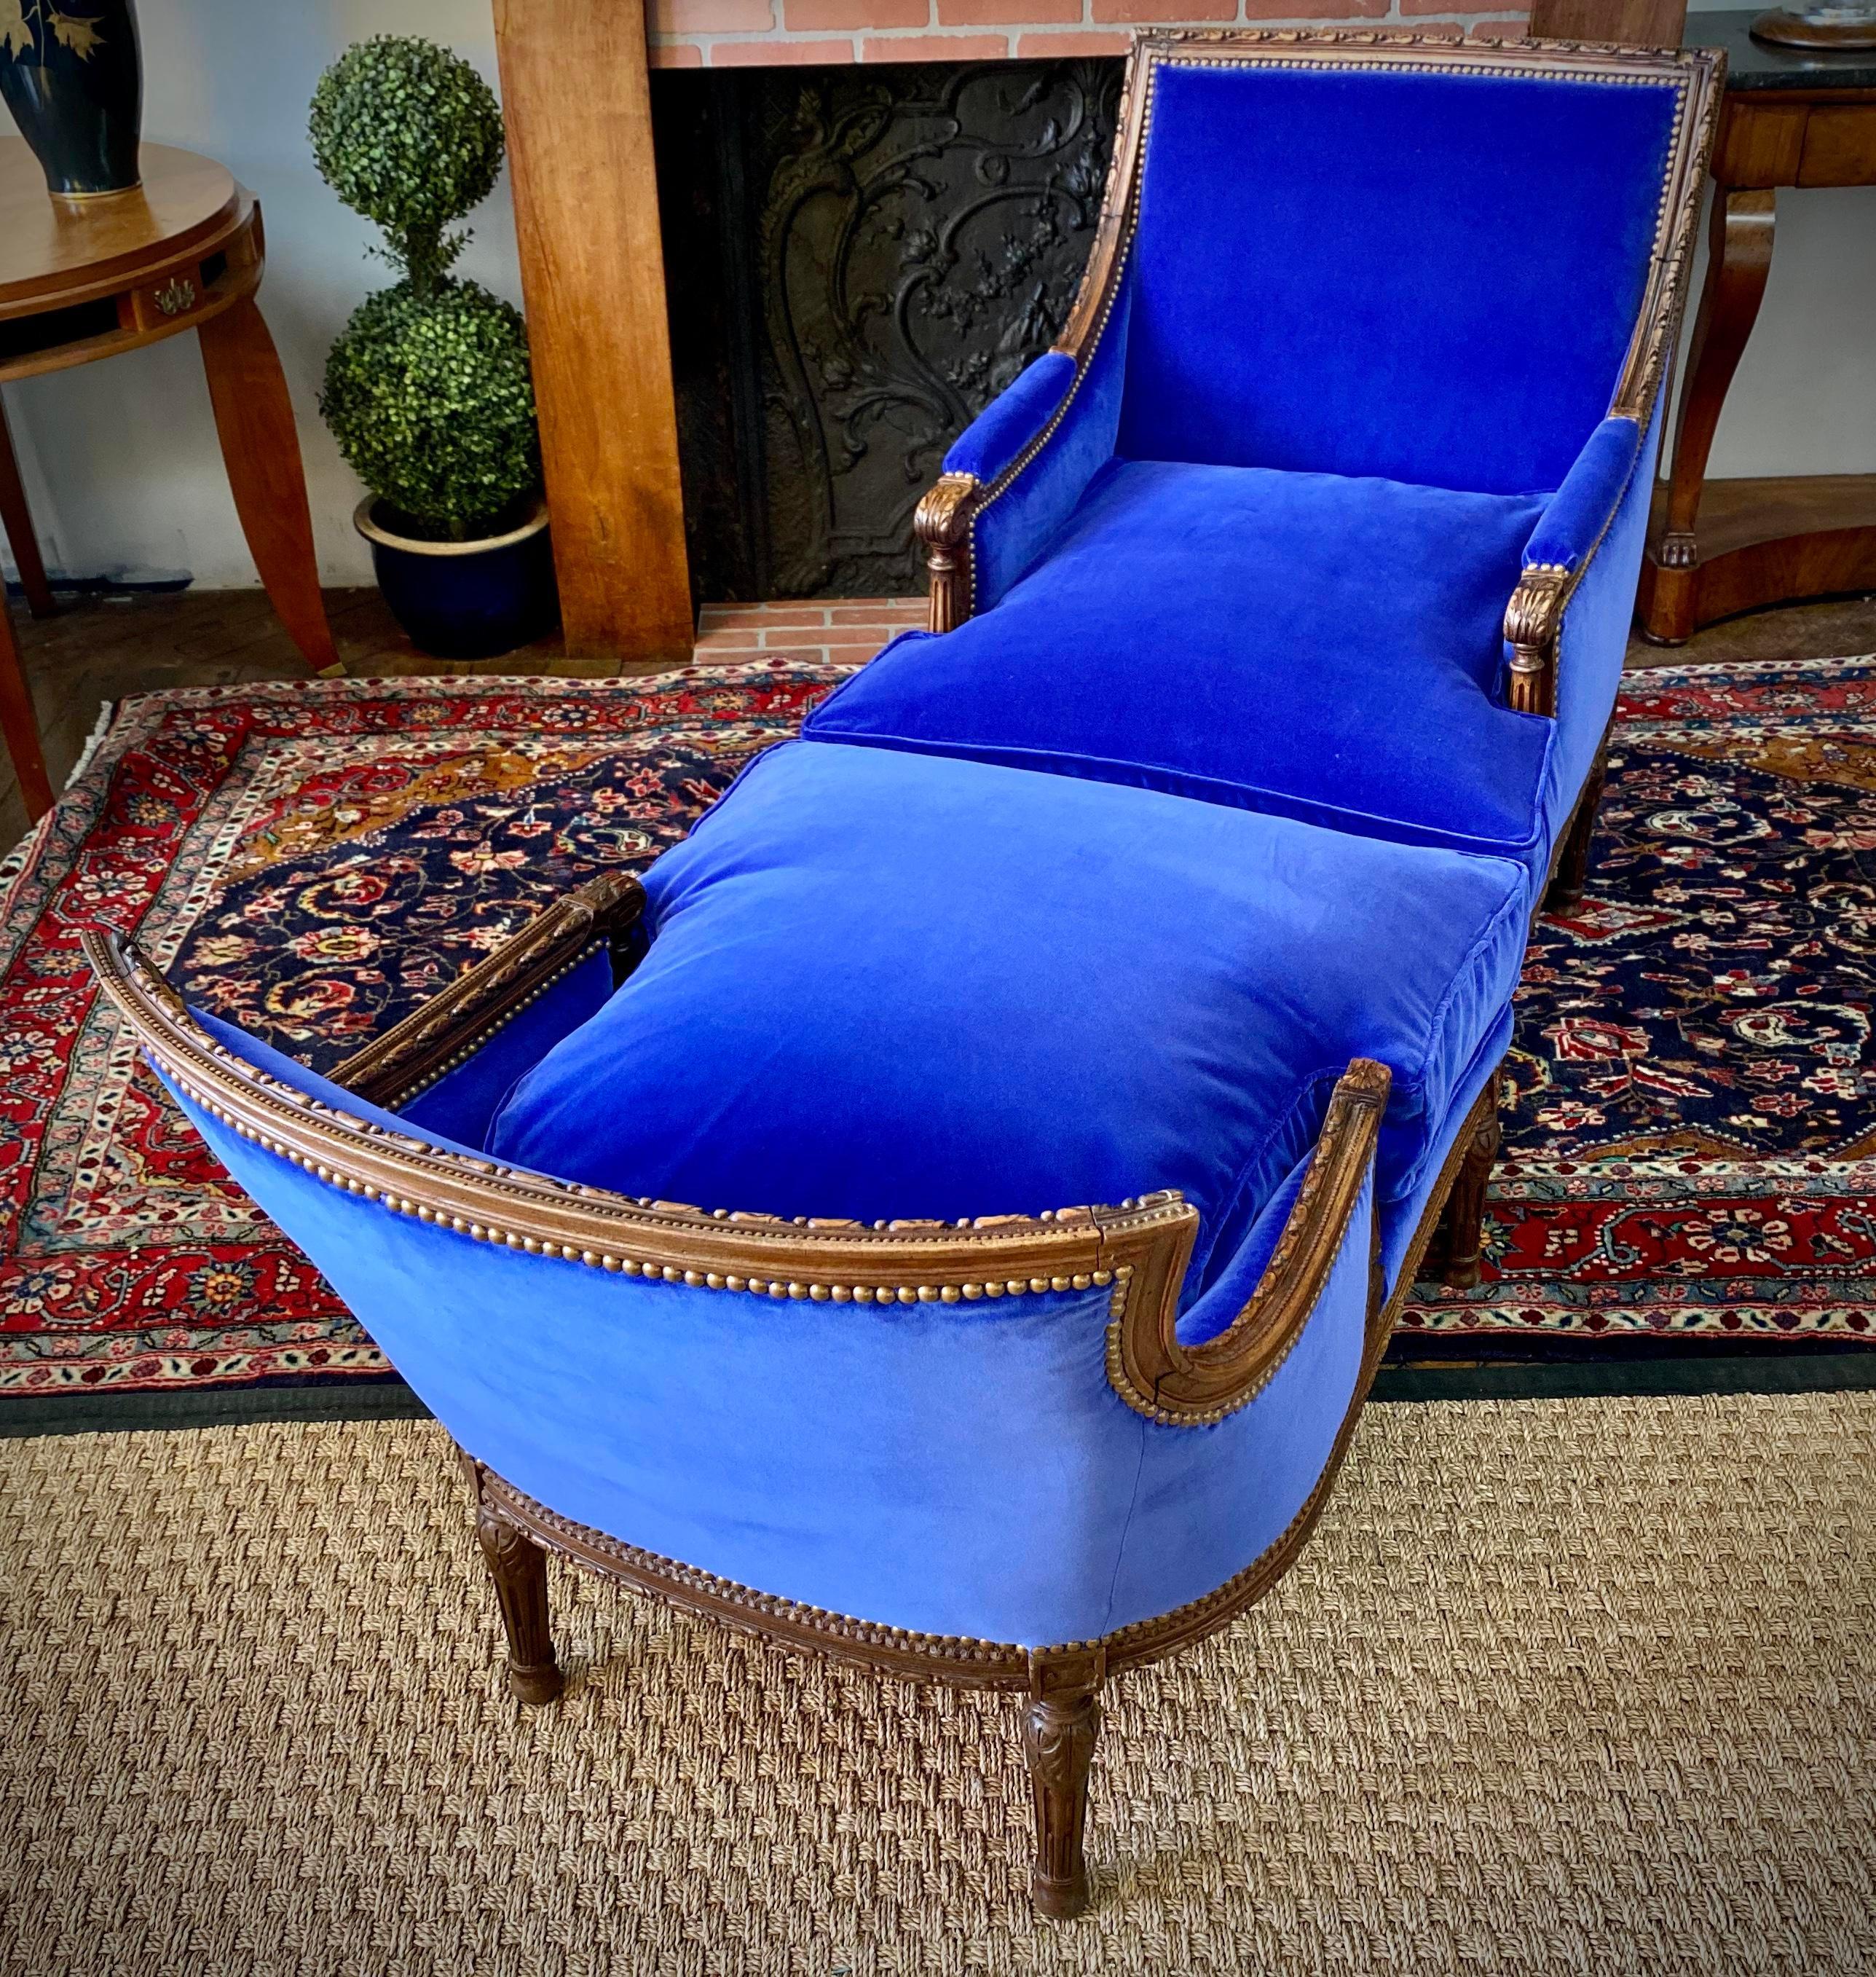 18th century chaise